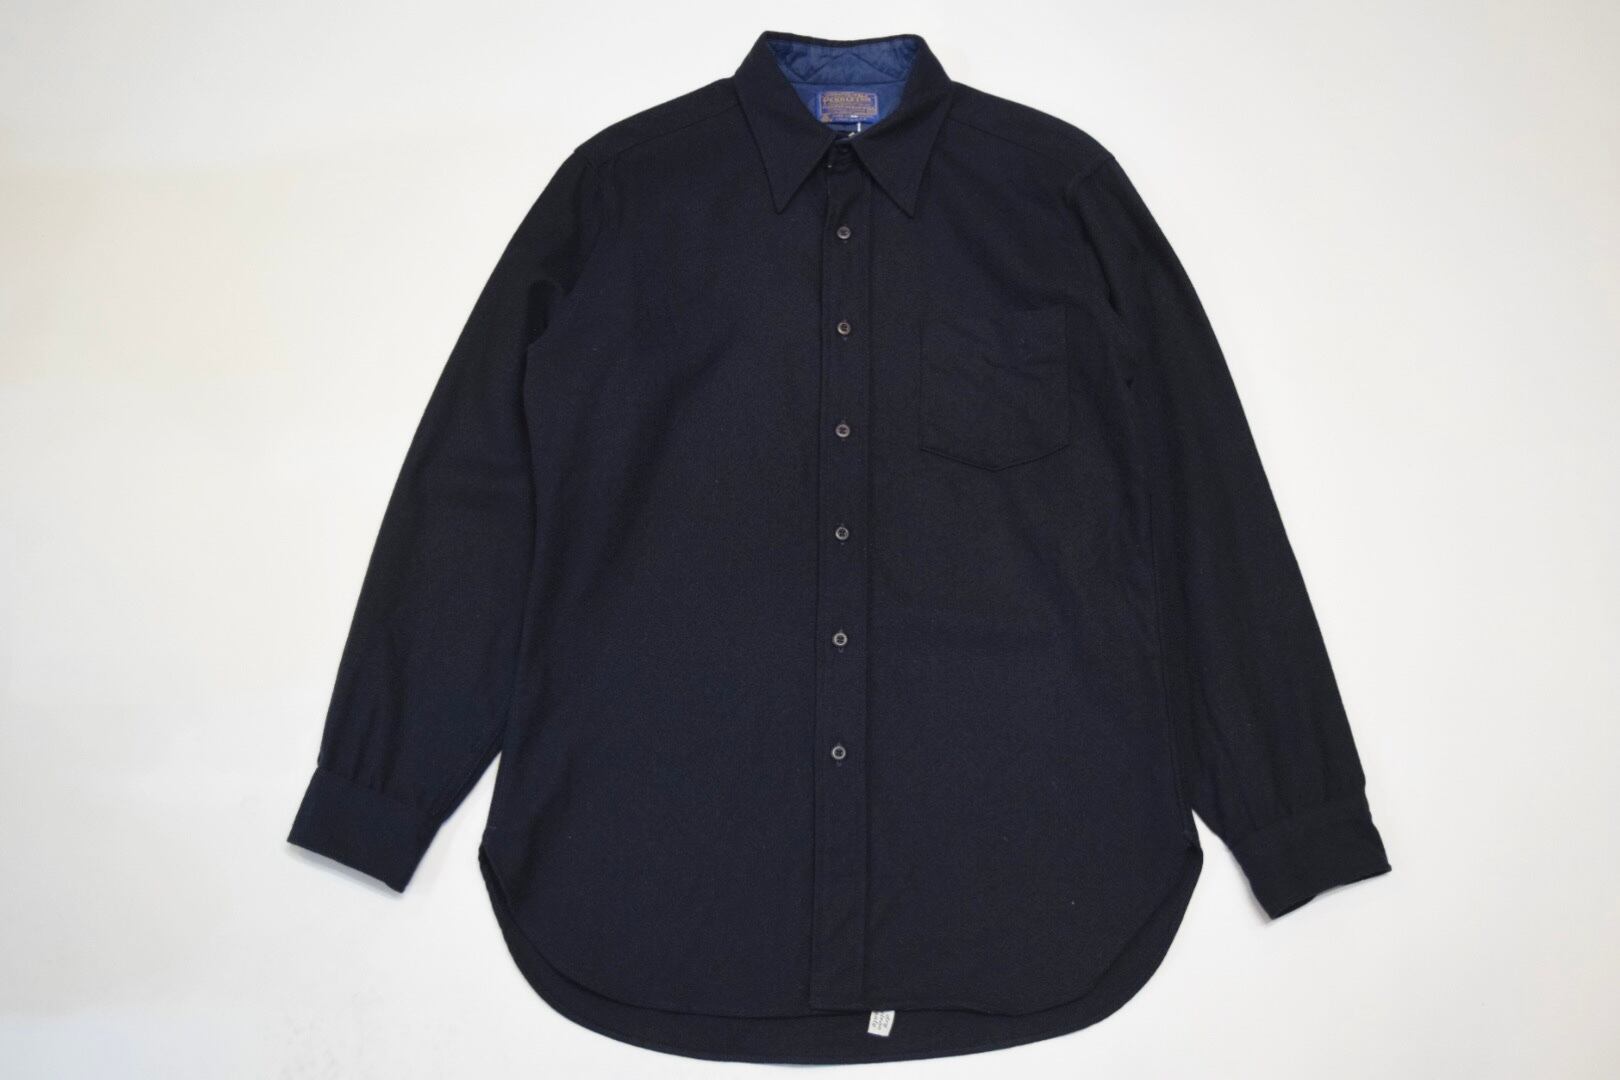 USED 70-80s Pendleton Wool Shirt -Medium 01255